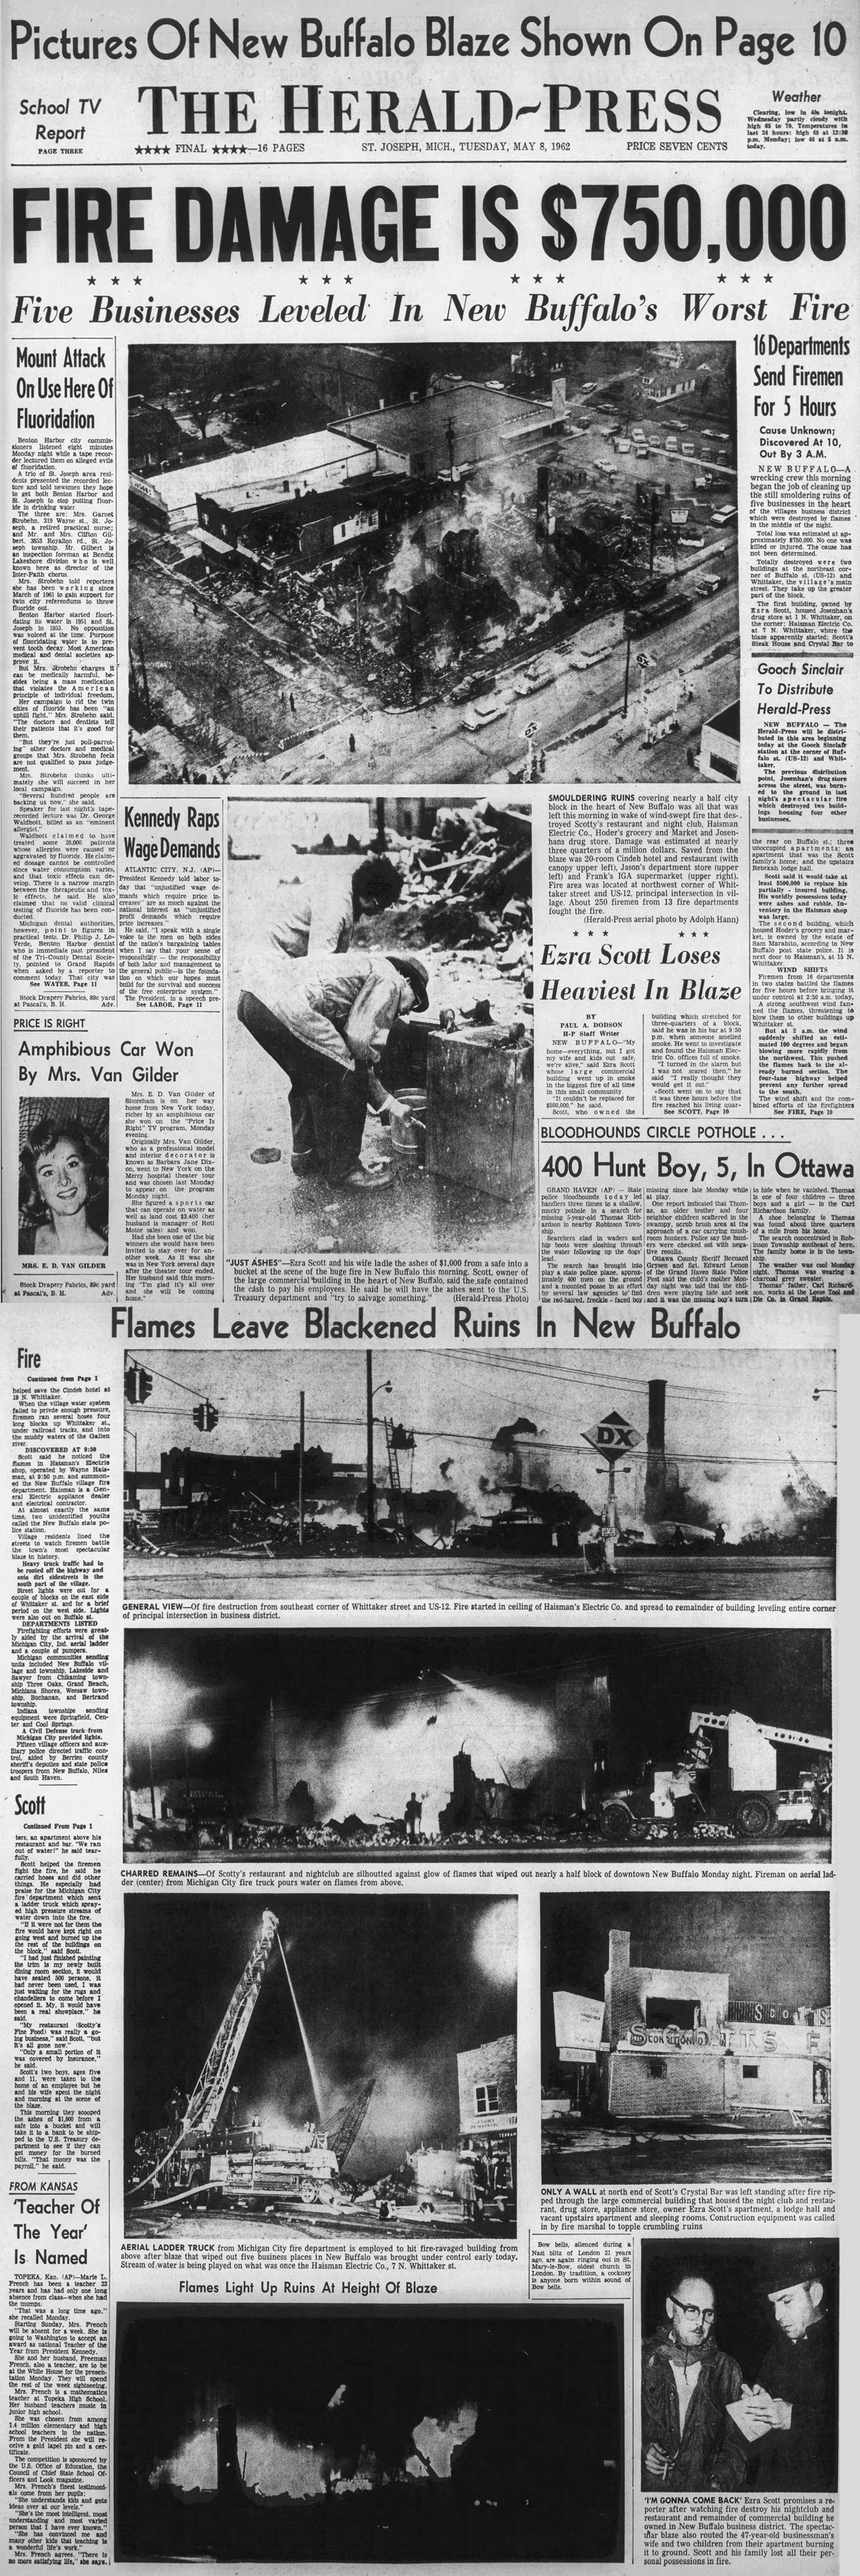 Josenhans Drug Store - May 8 1962 Fire